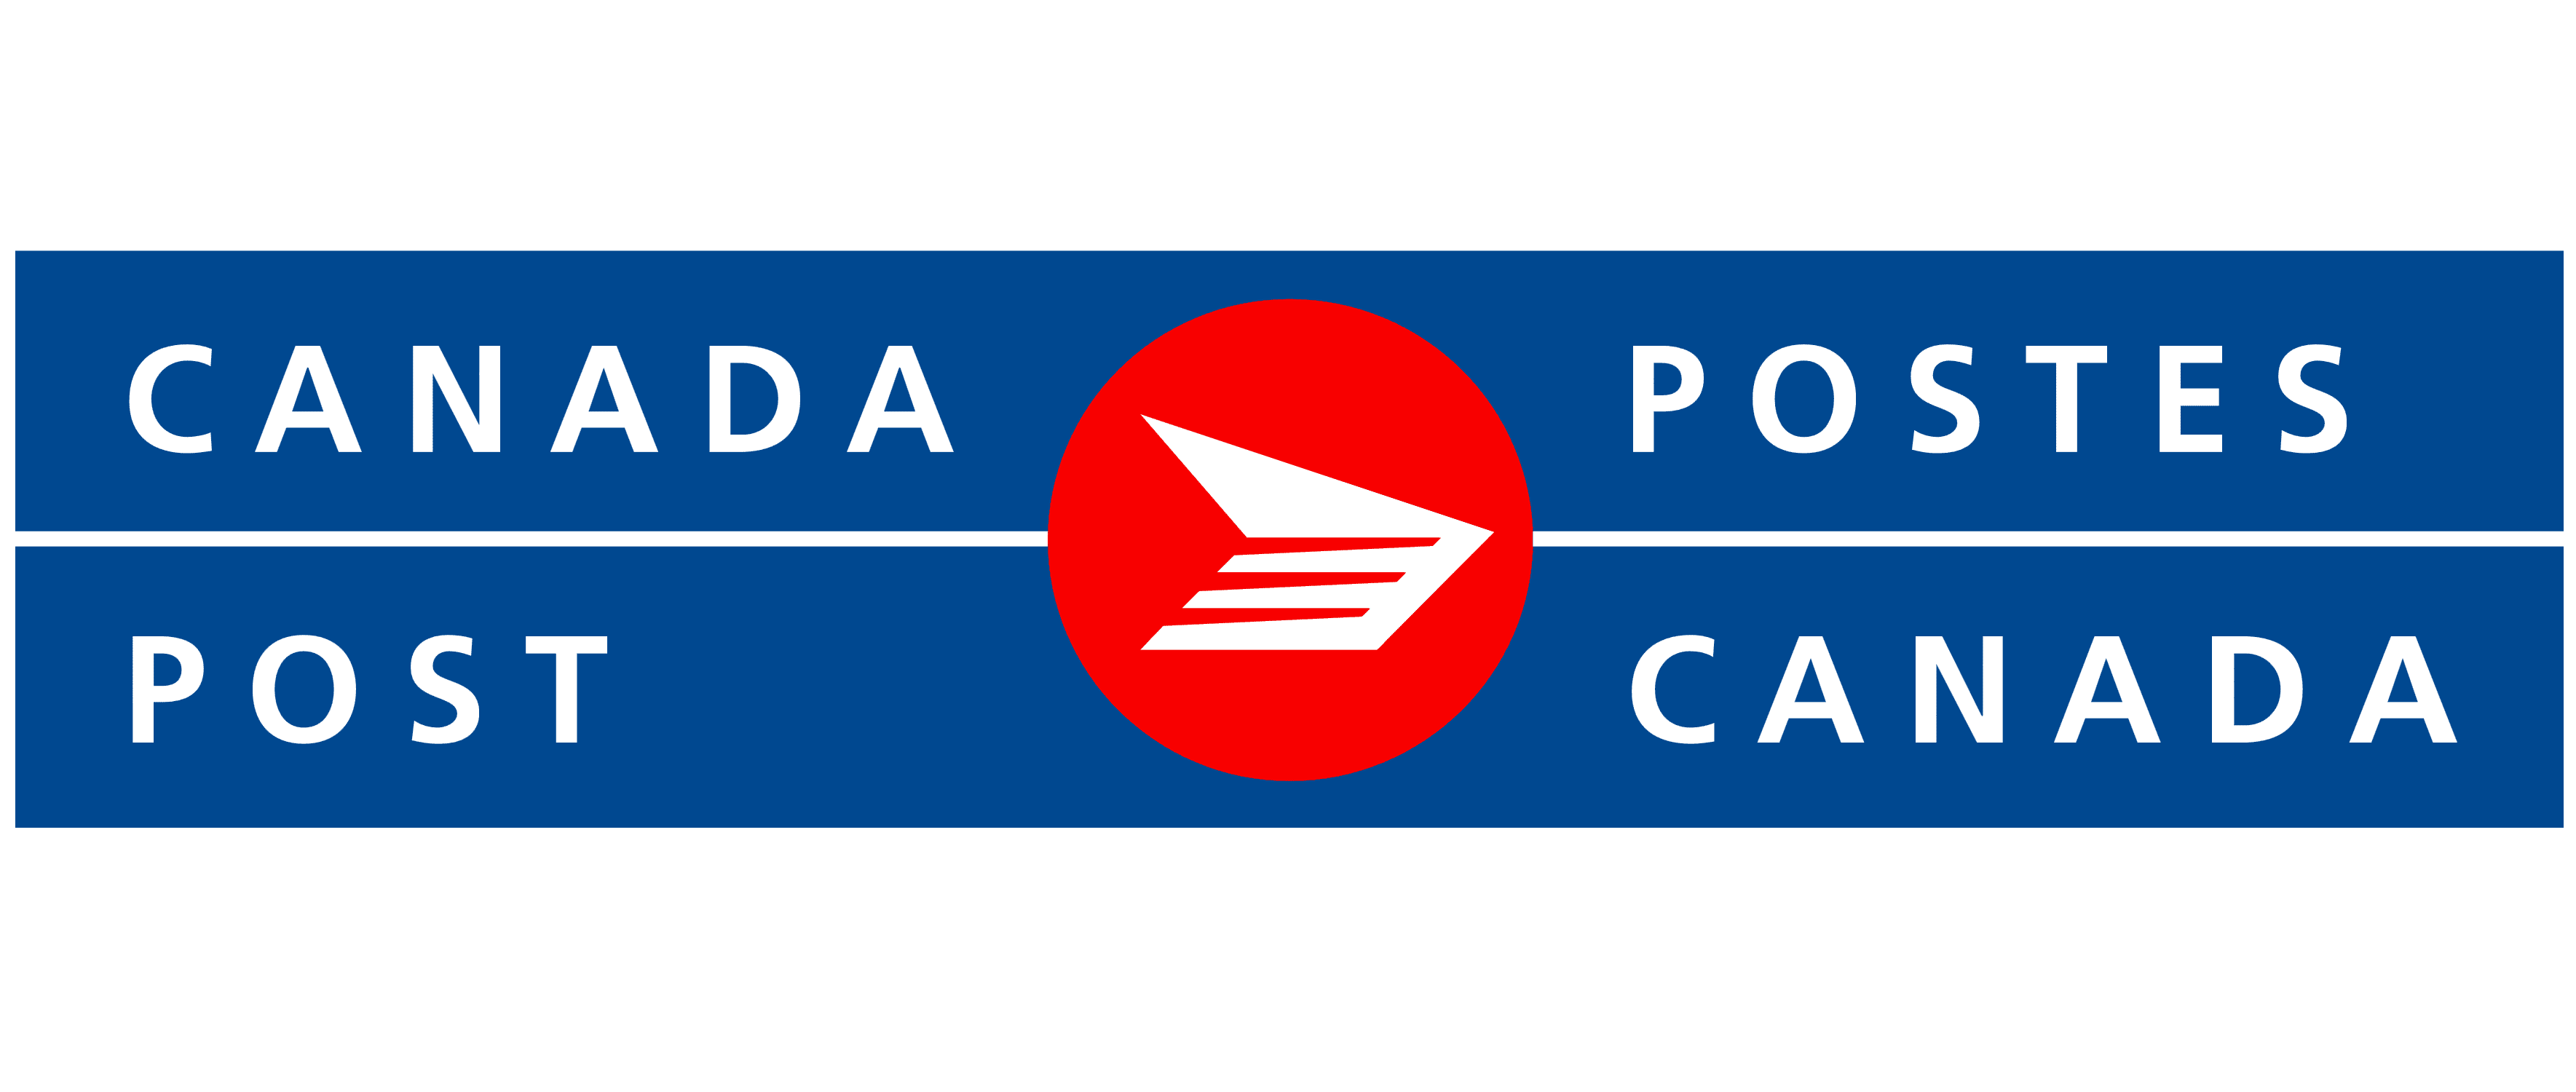 Poste Canada